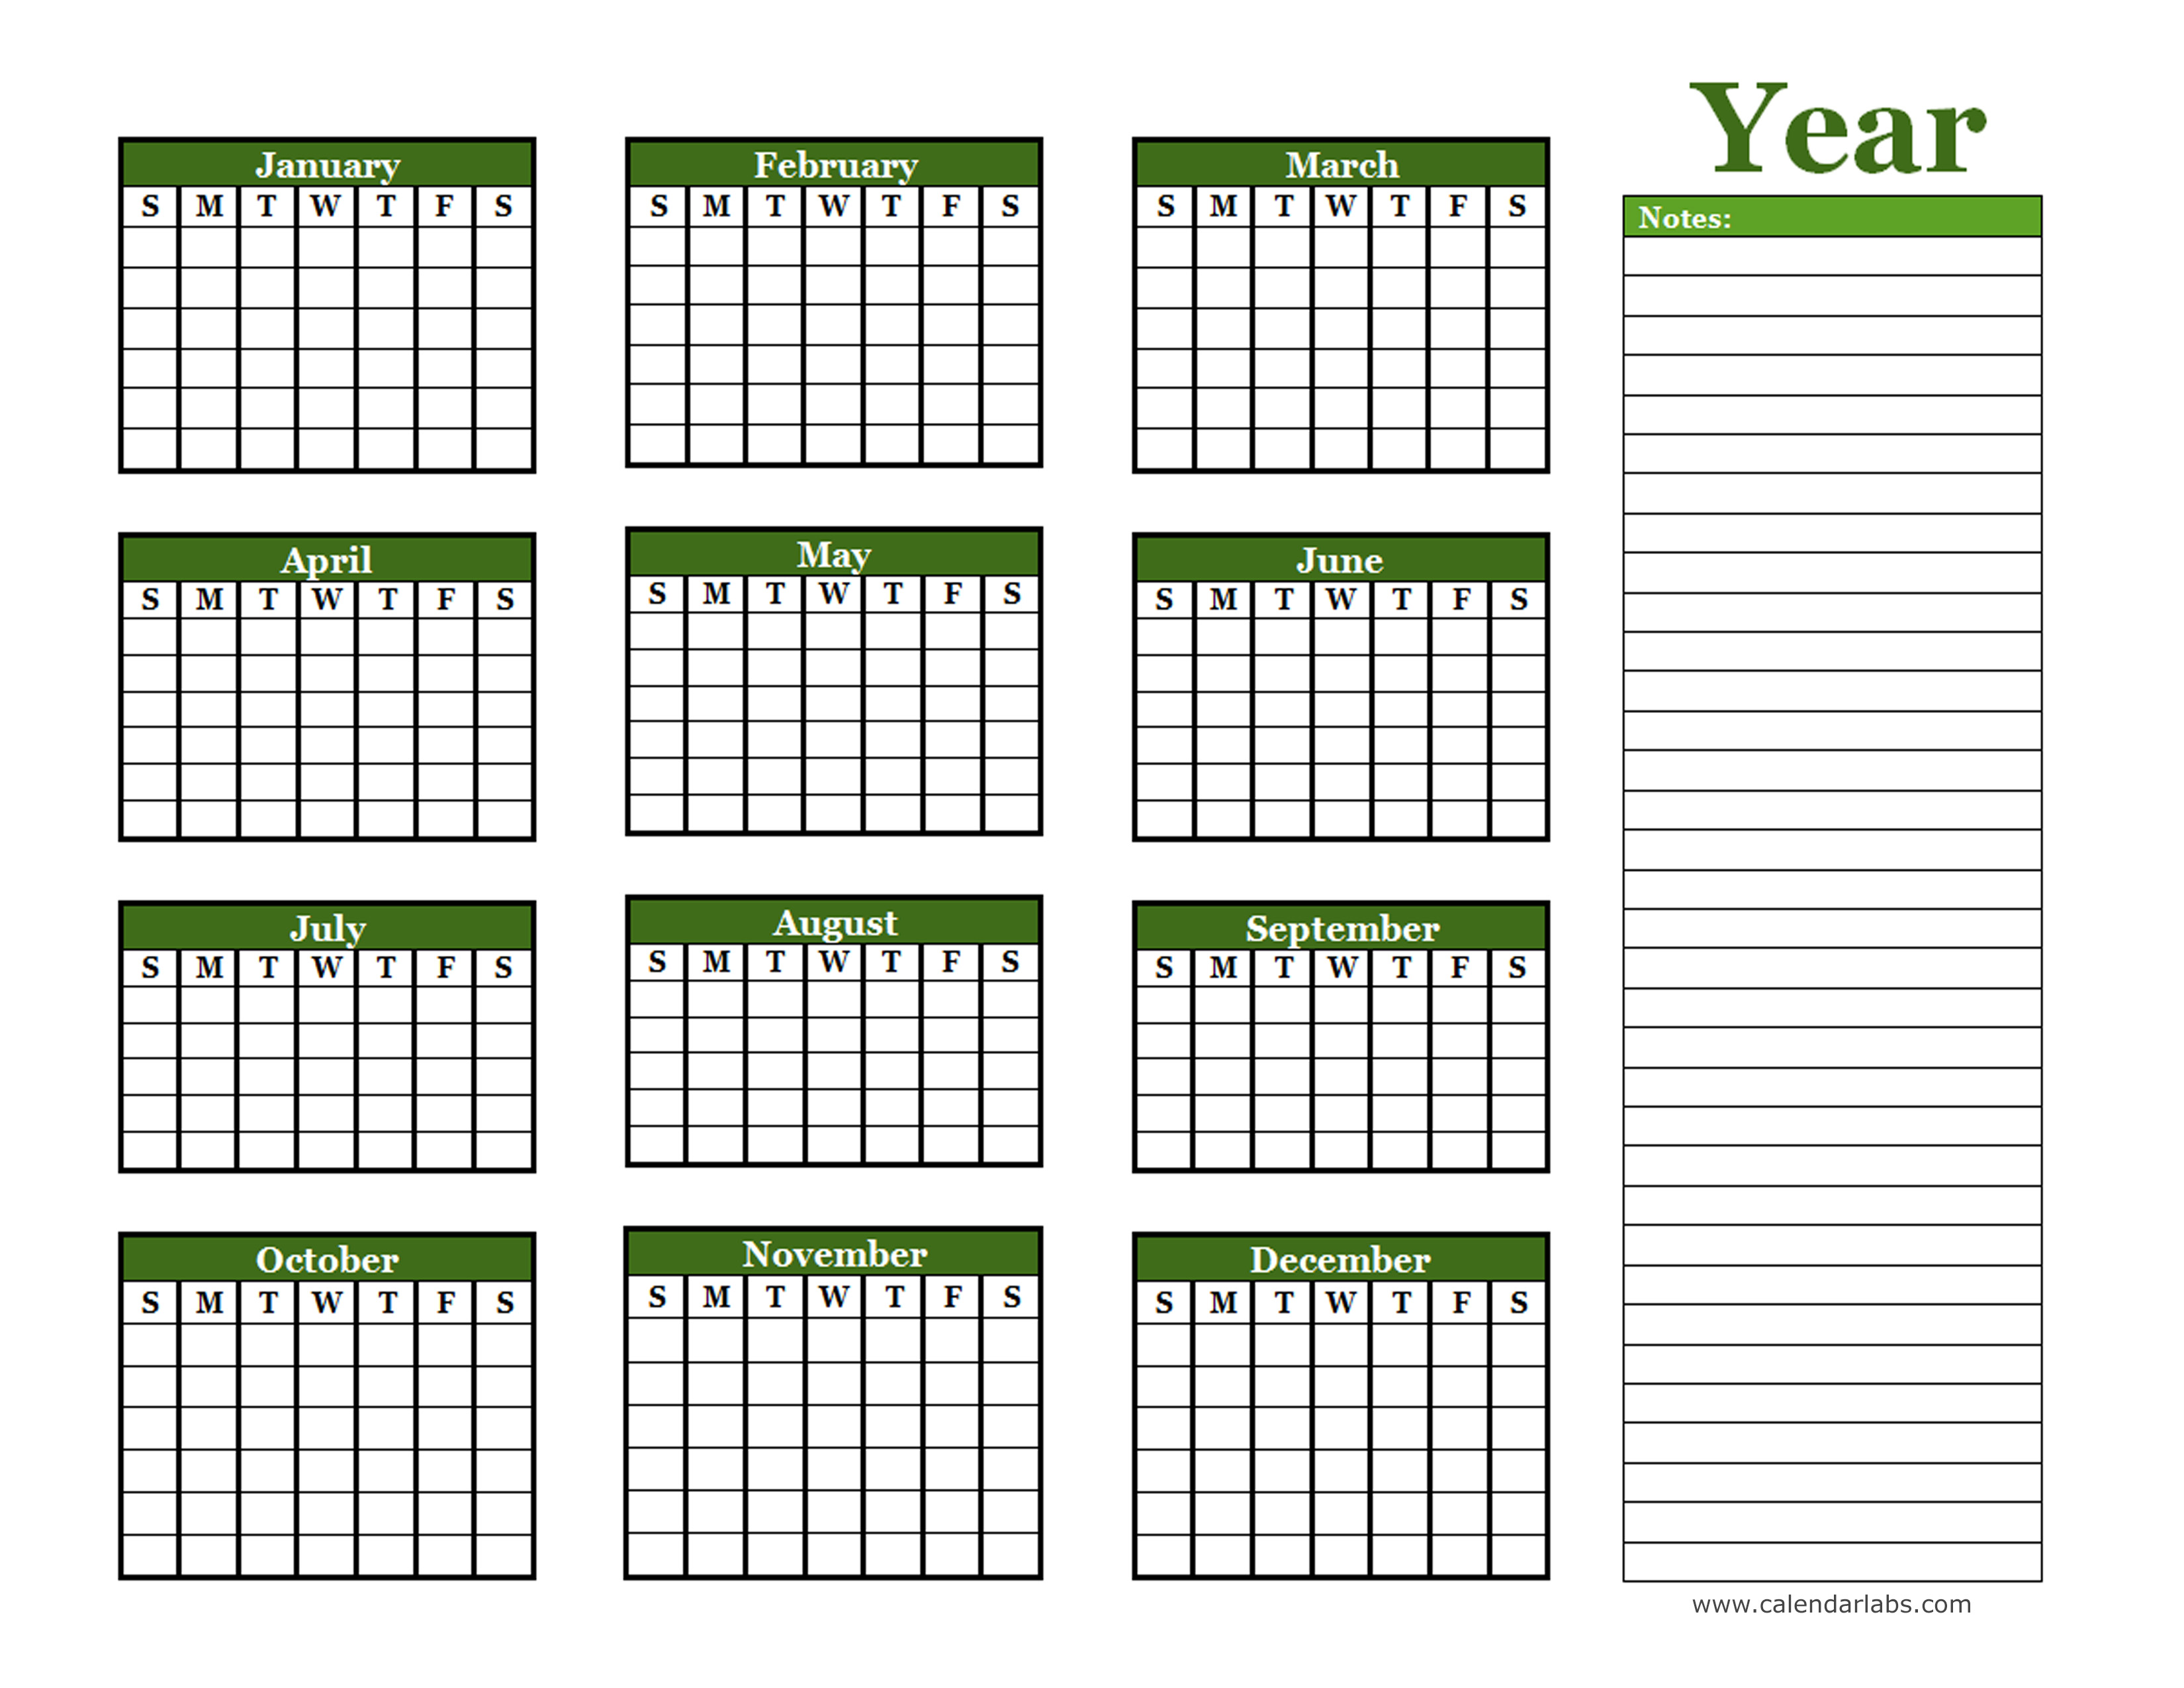 year-blank-calendar-customize-and-print